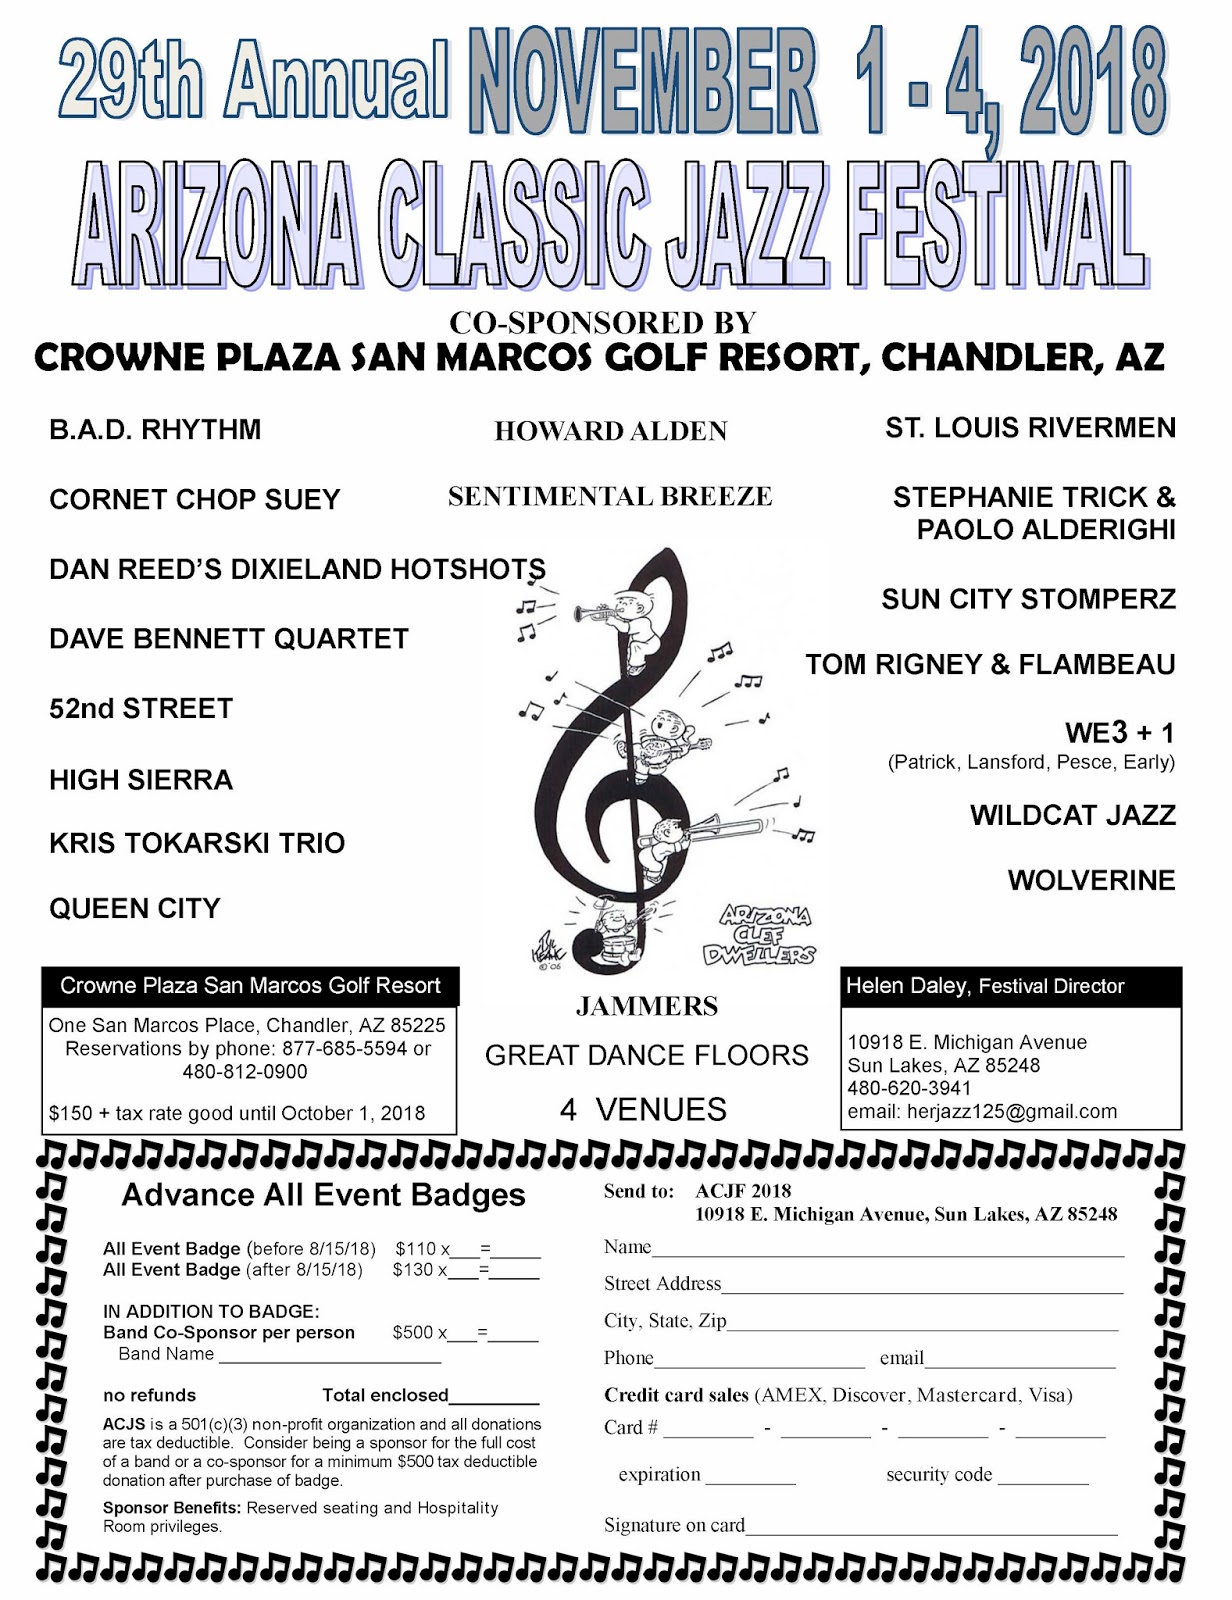 The Syncopated Times: Arizona Classic Jazz Festival